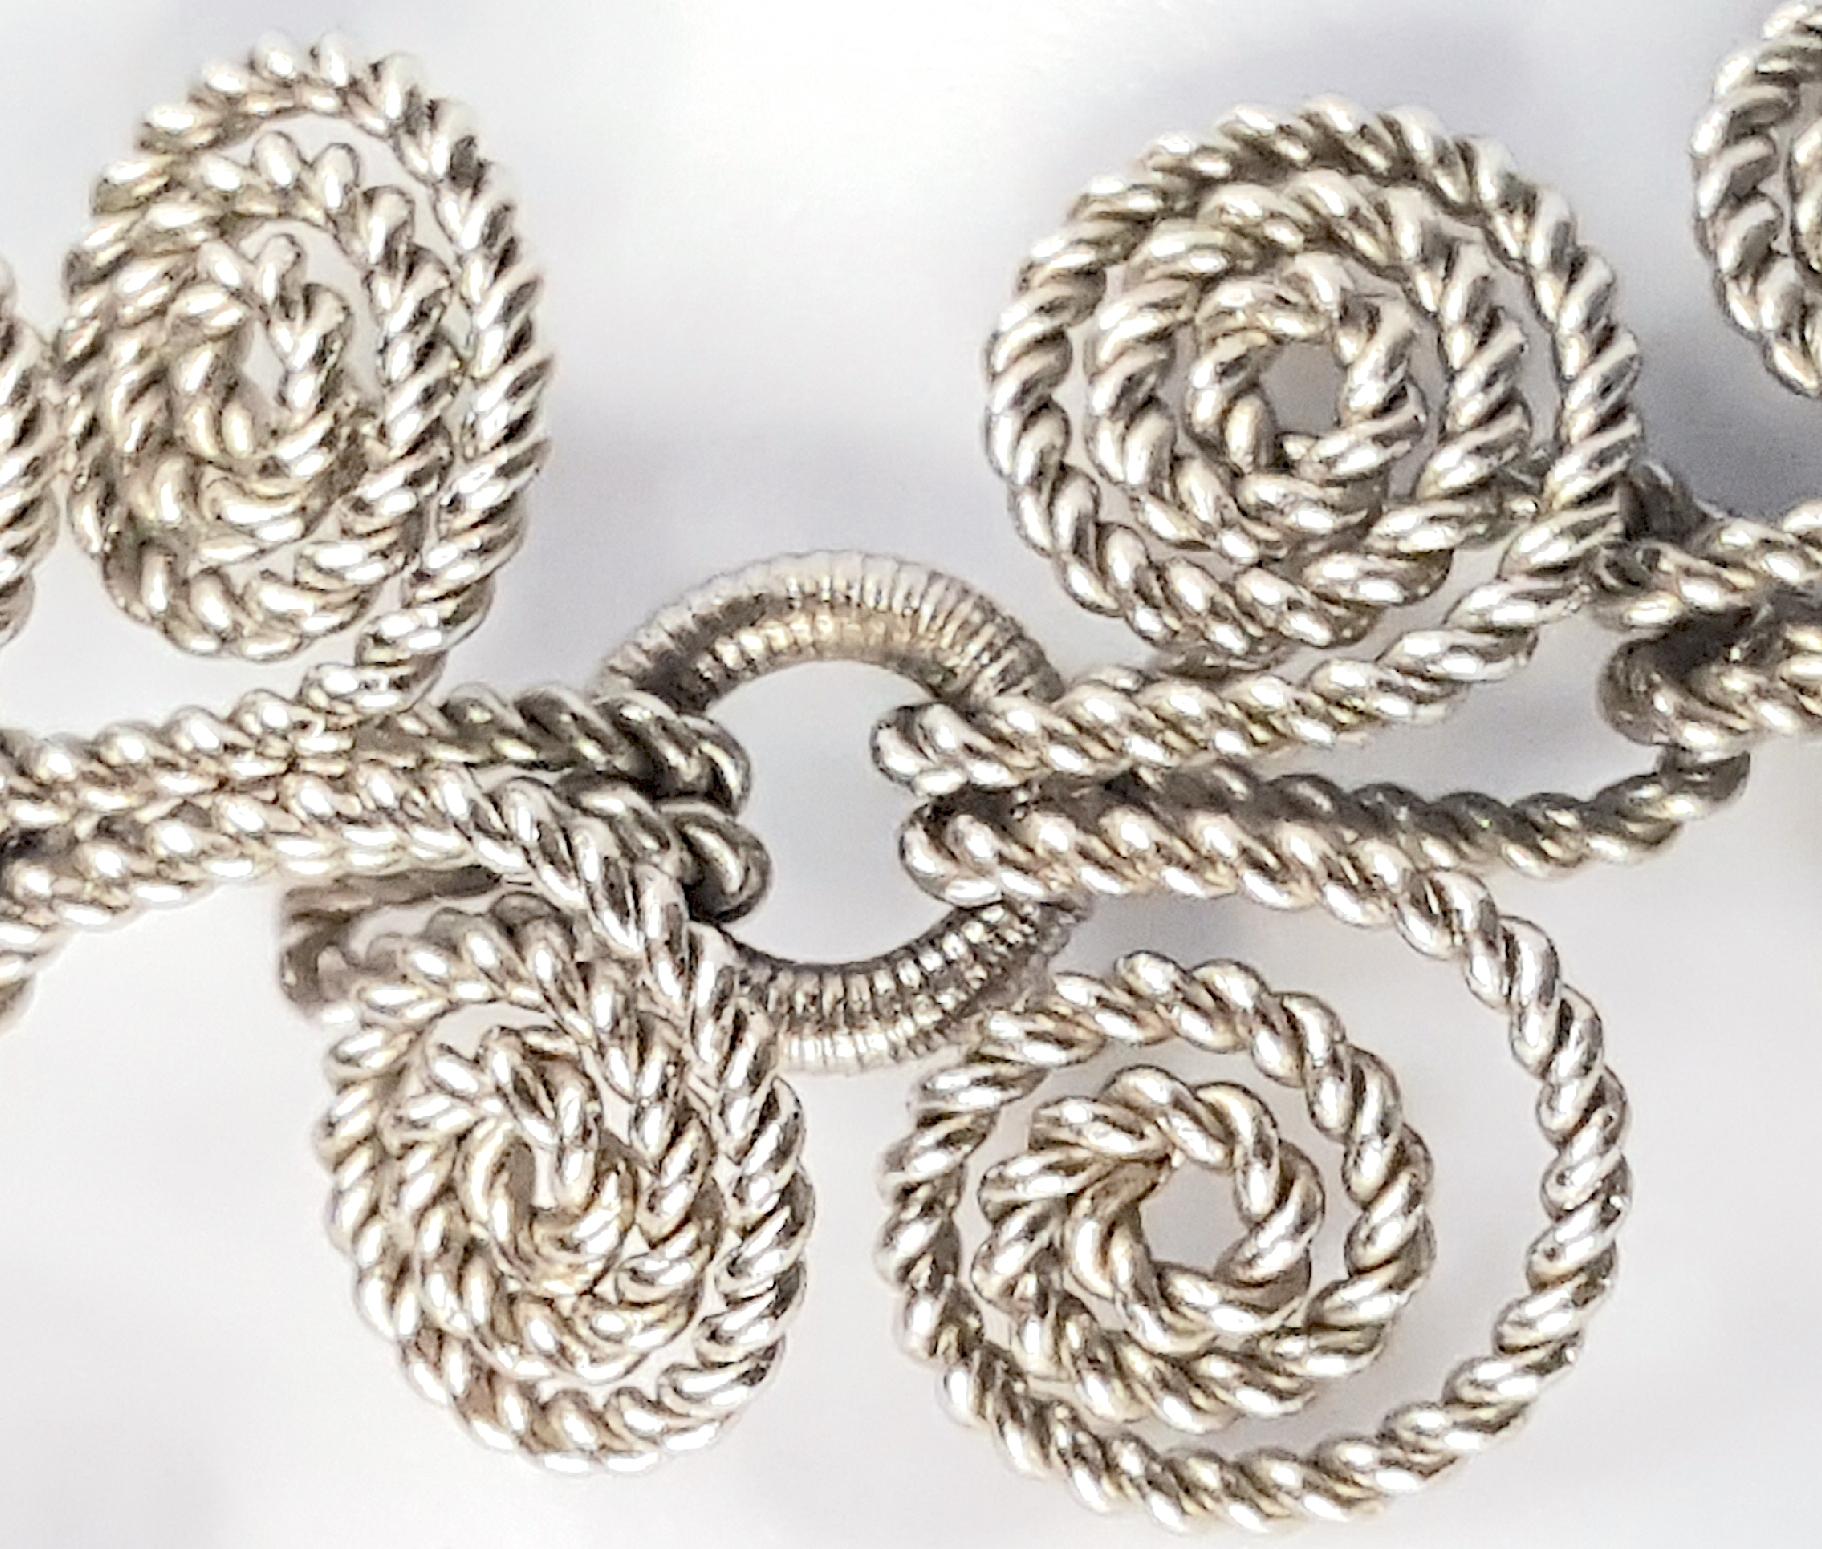 hexagonal link chain